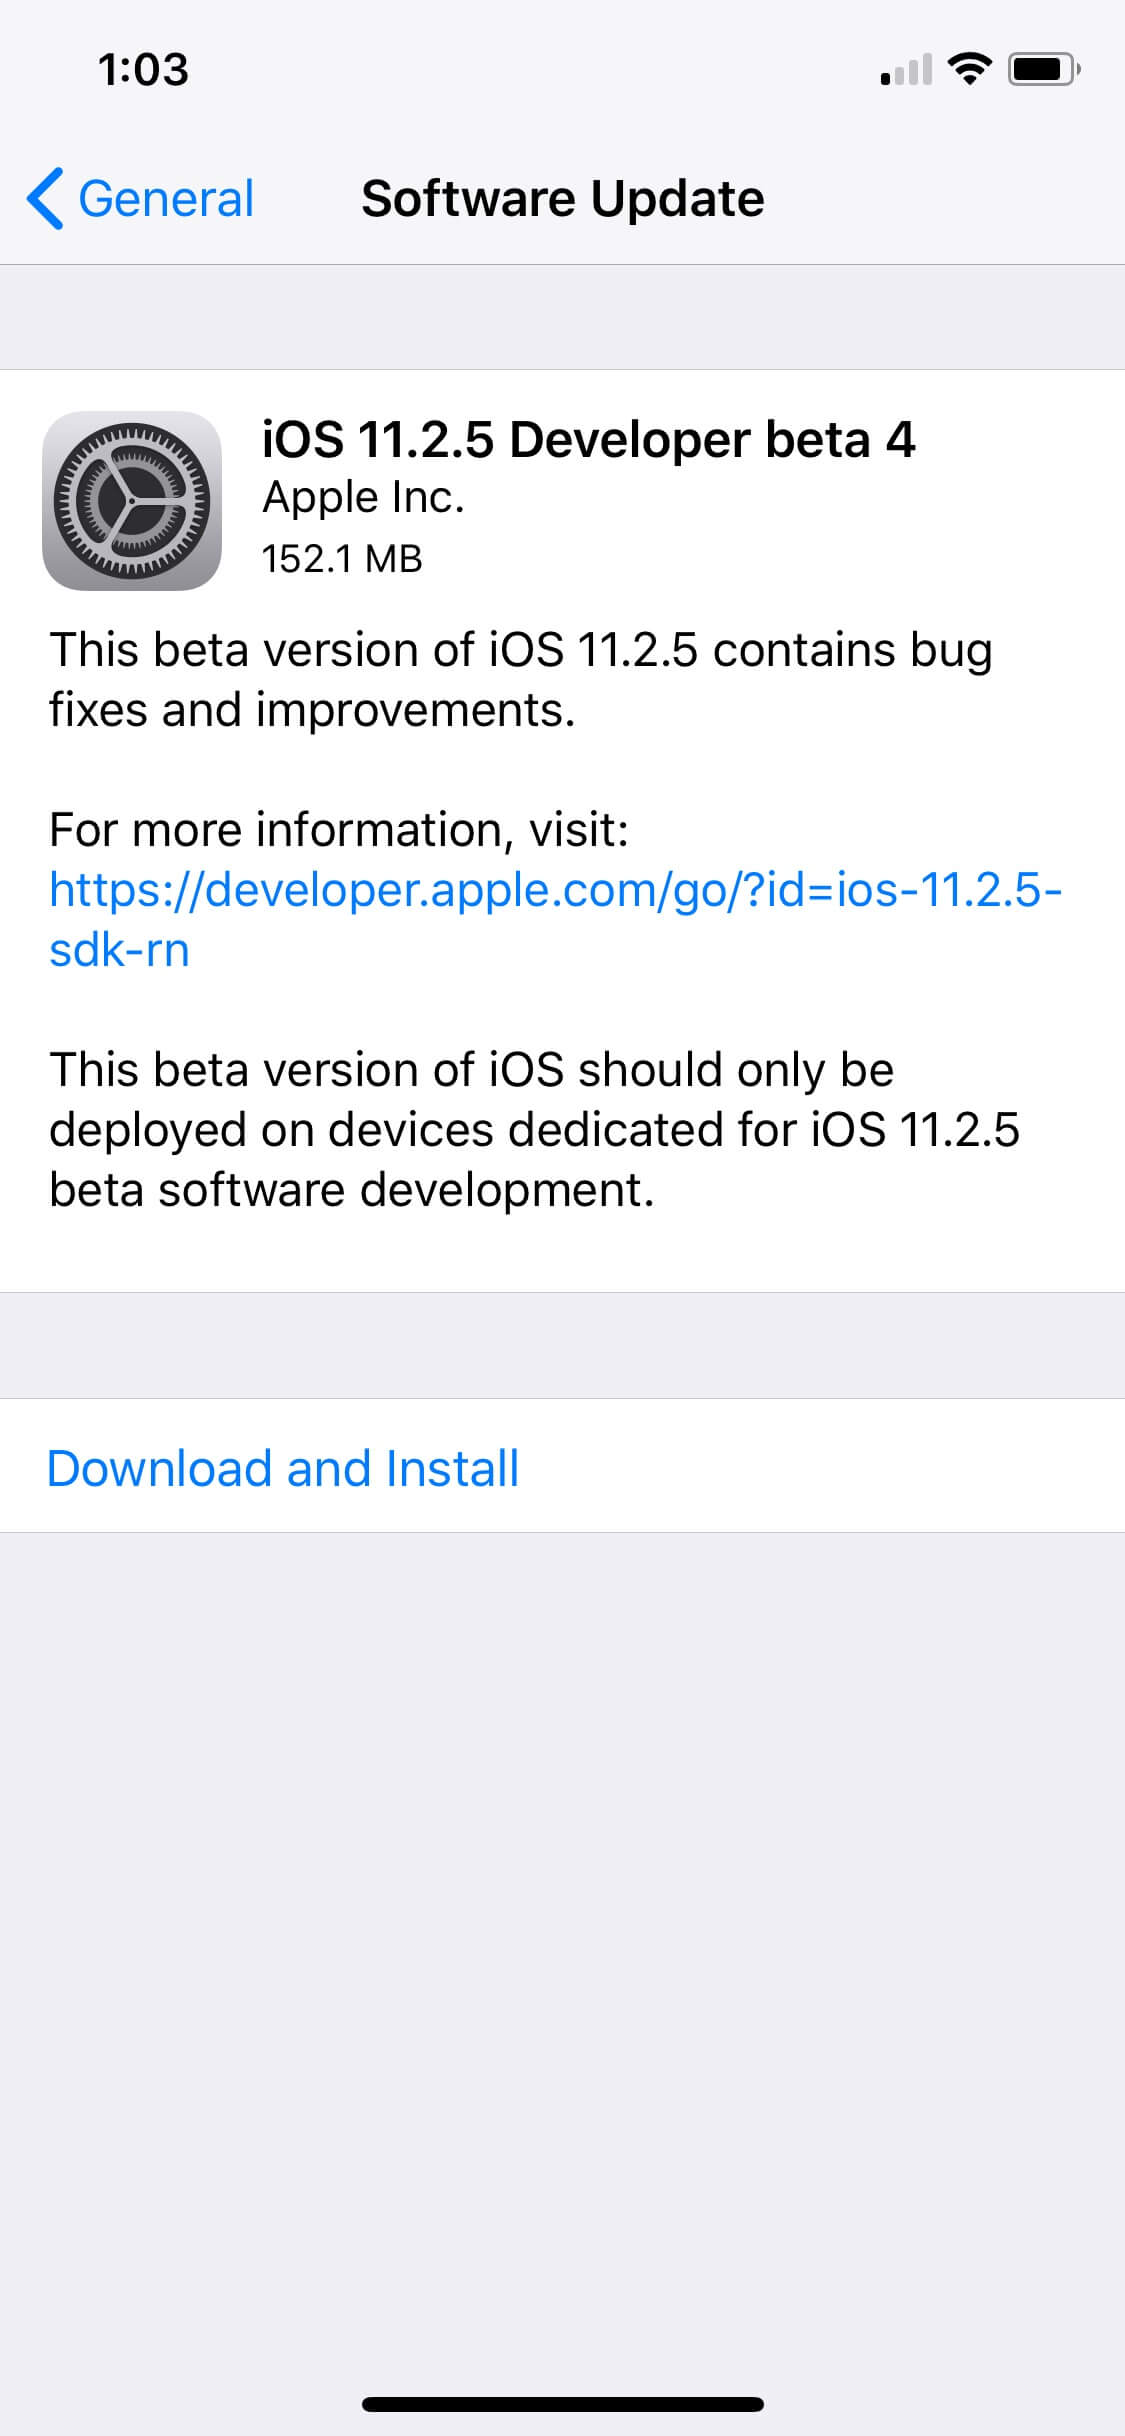 iOS 11.2.5 Beta 4